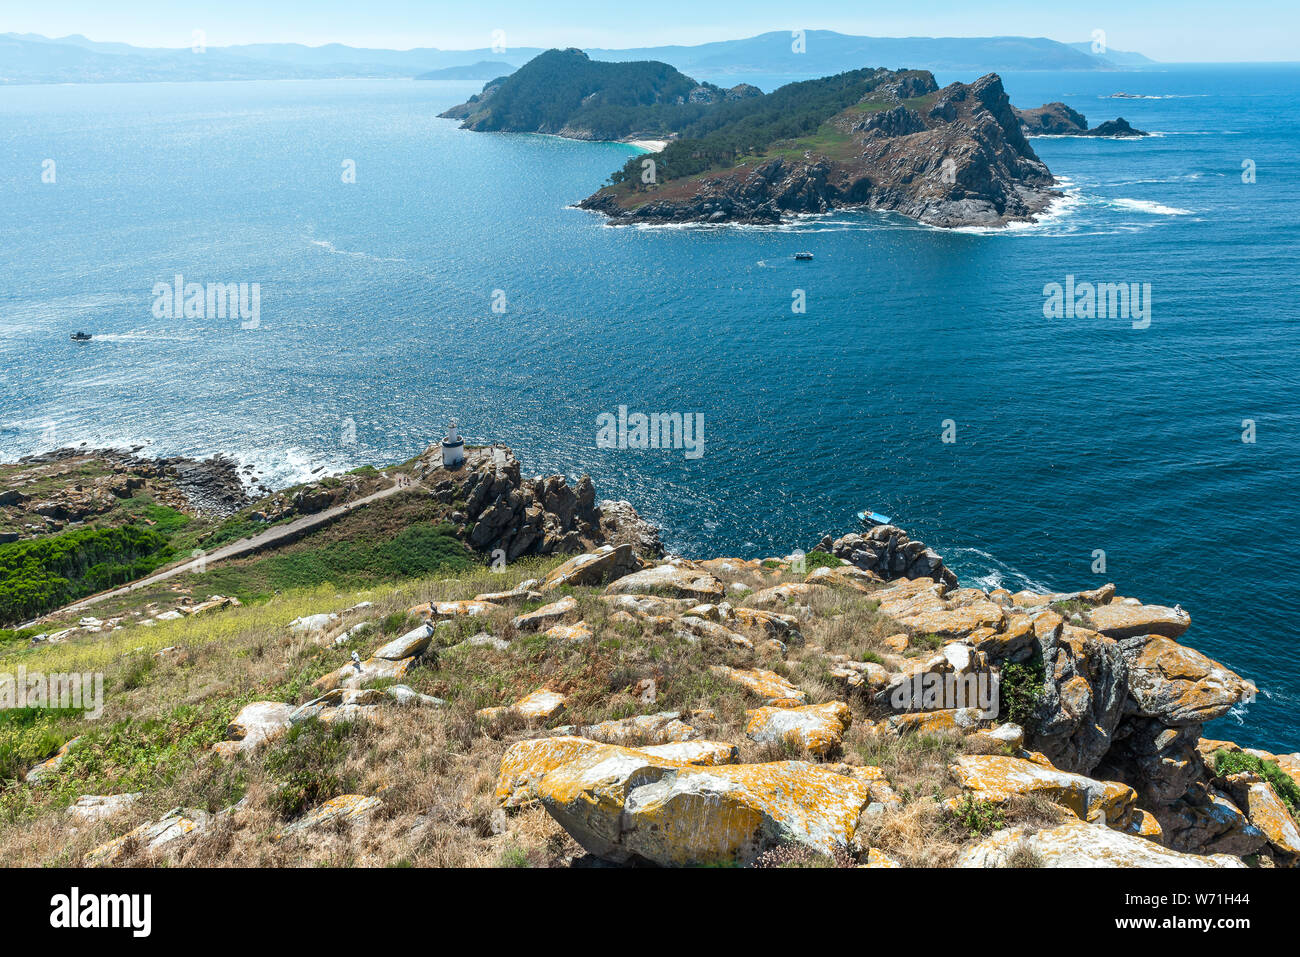 Cies Islands: South Island from Faro Island, National Park Maritime-Terrestrial of the Atlantic Islands, Galicia, Spain Stock Photo